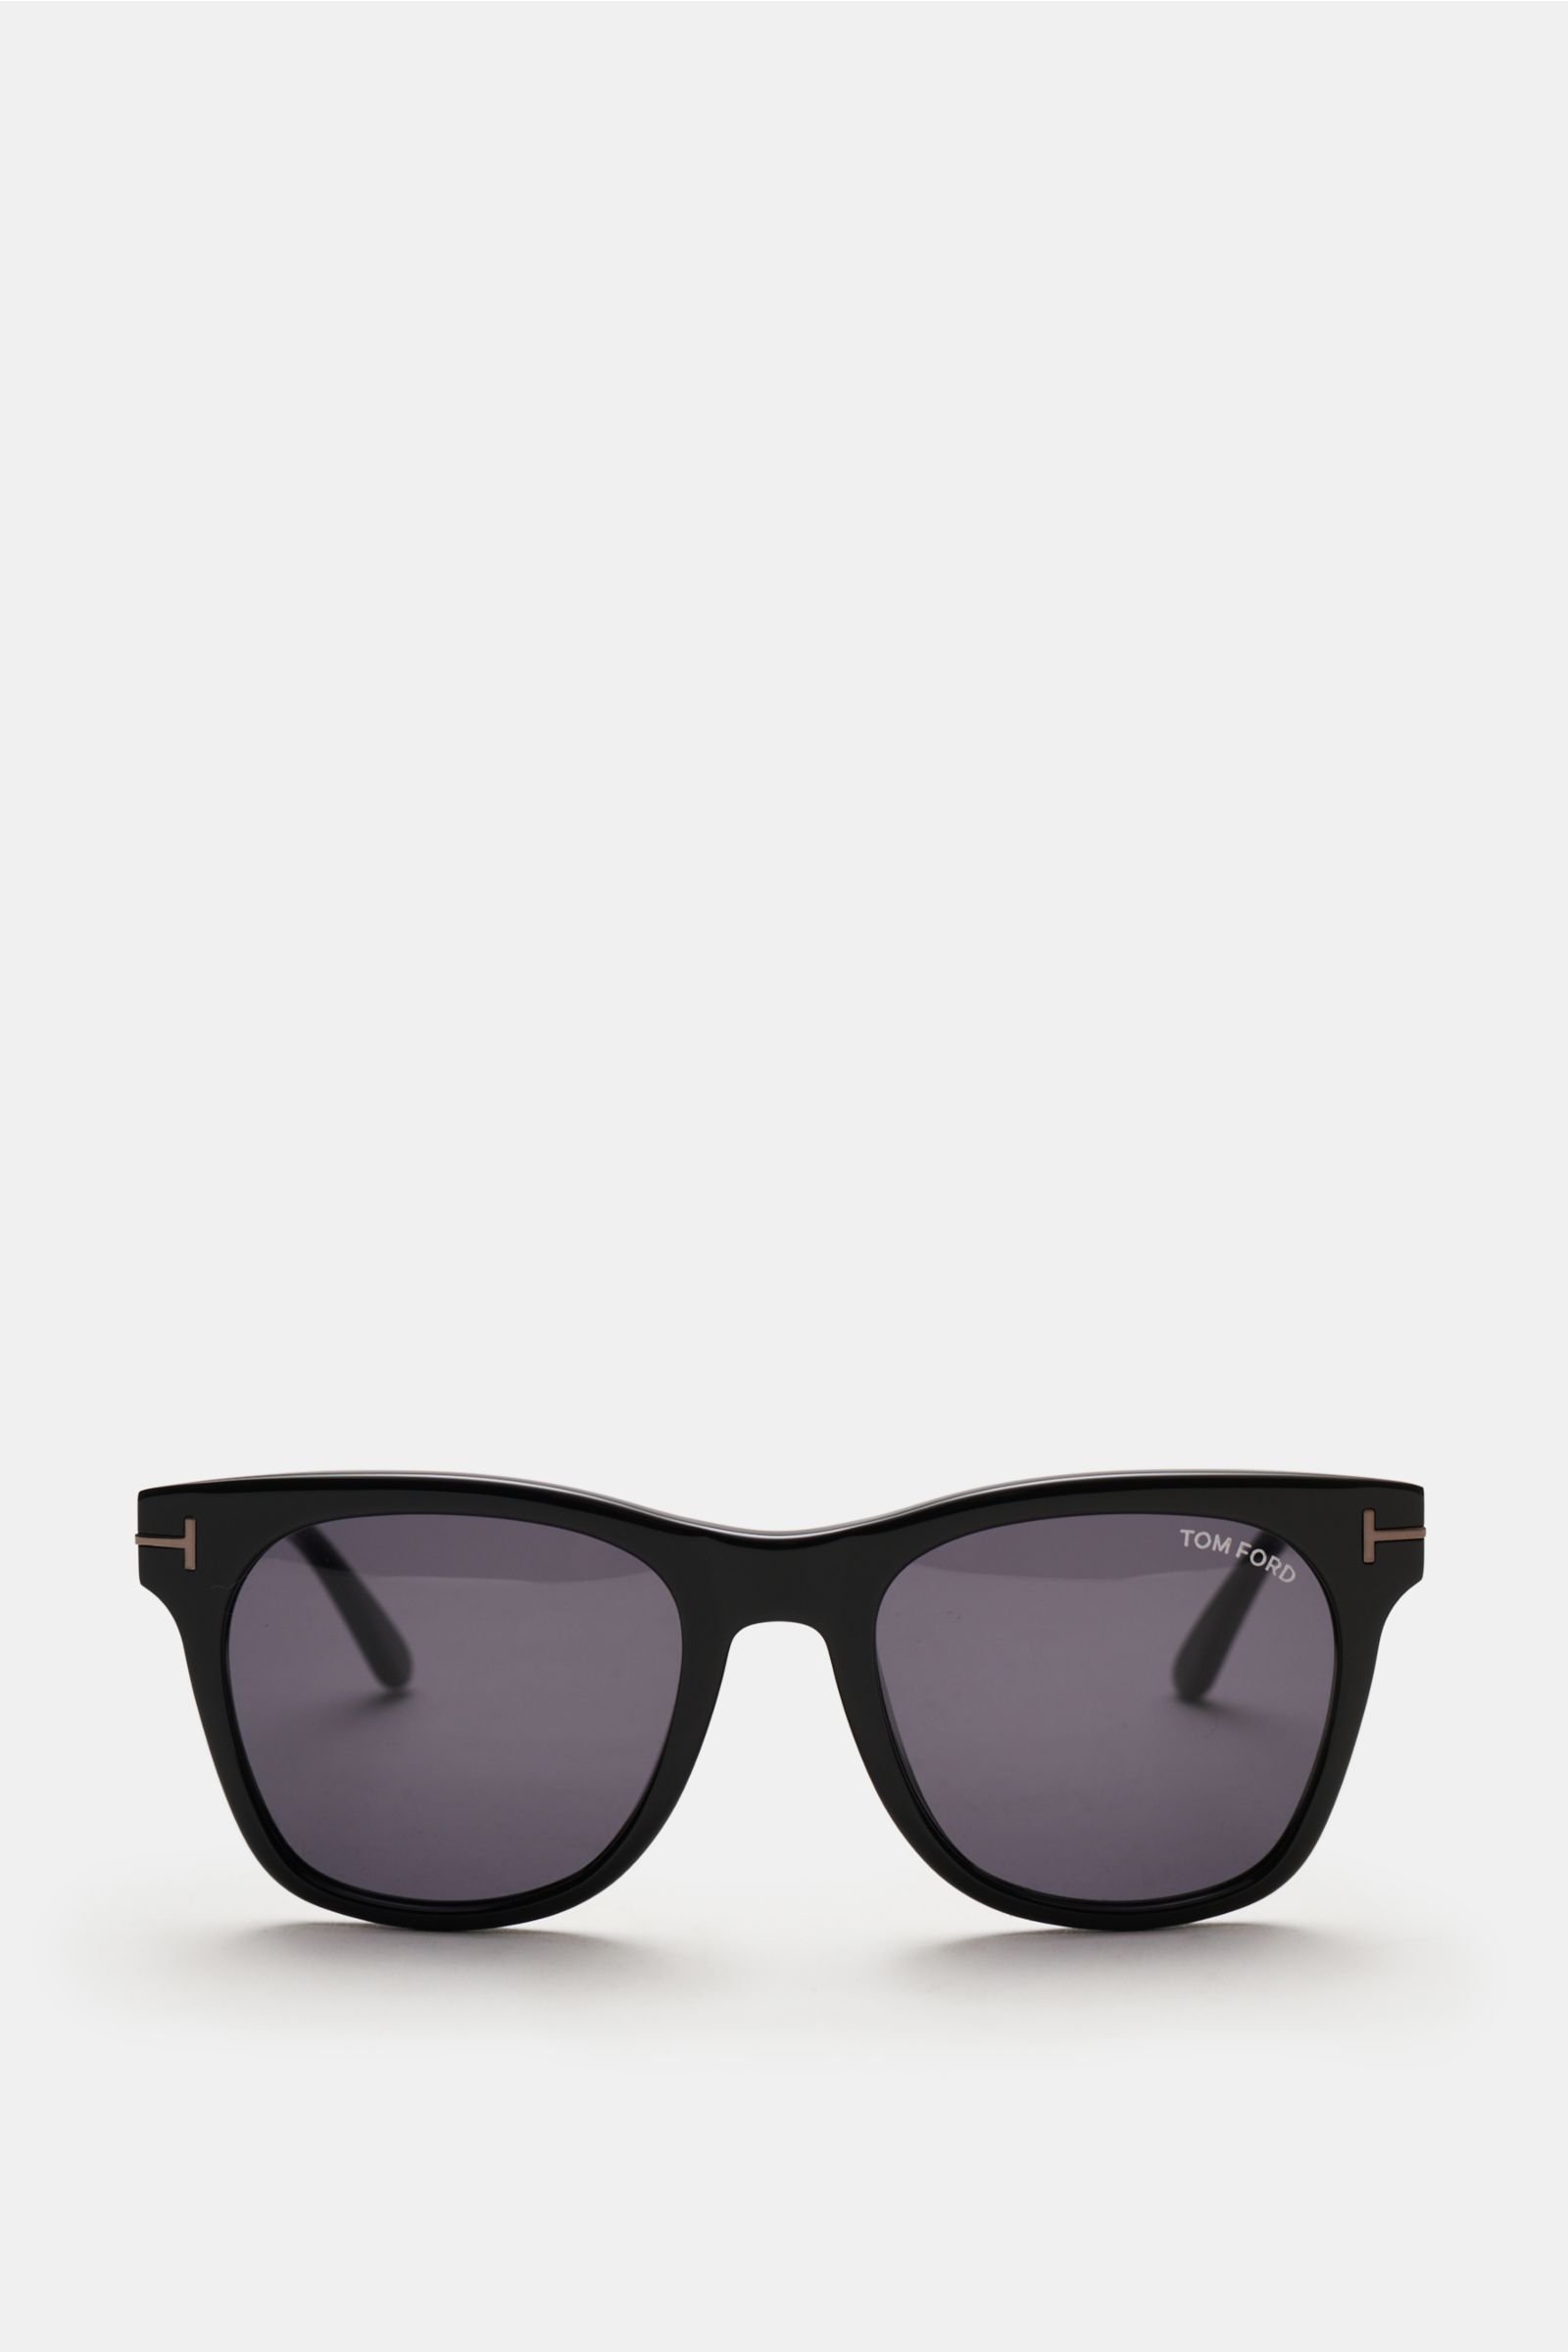 Sunglasses 'Brooklyn' black/dark grey